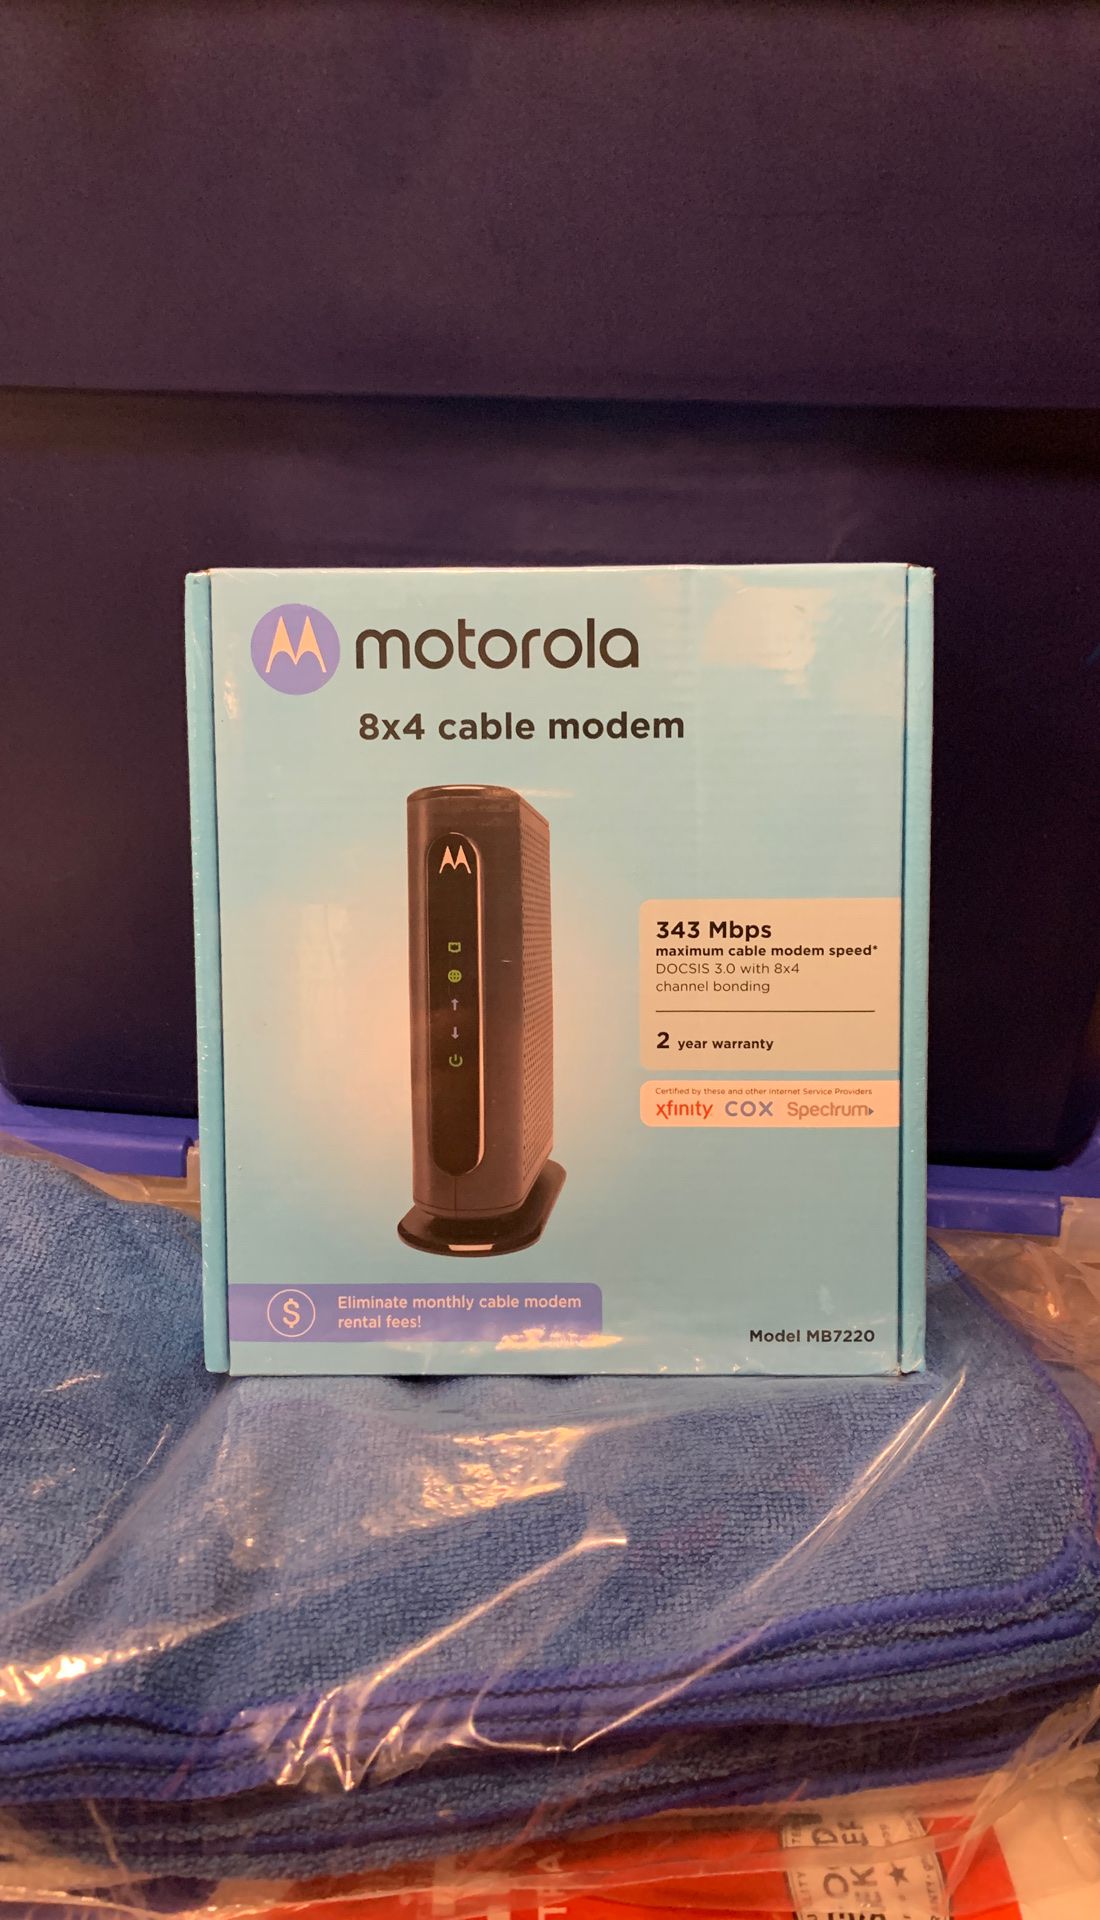 Motorola 8x4 cable modem